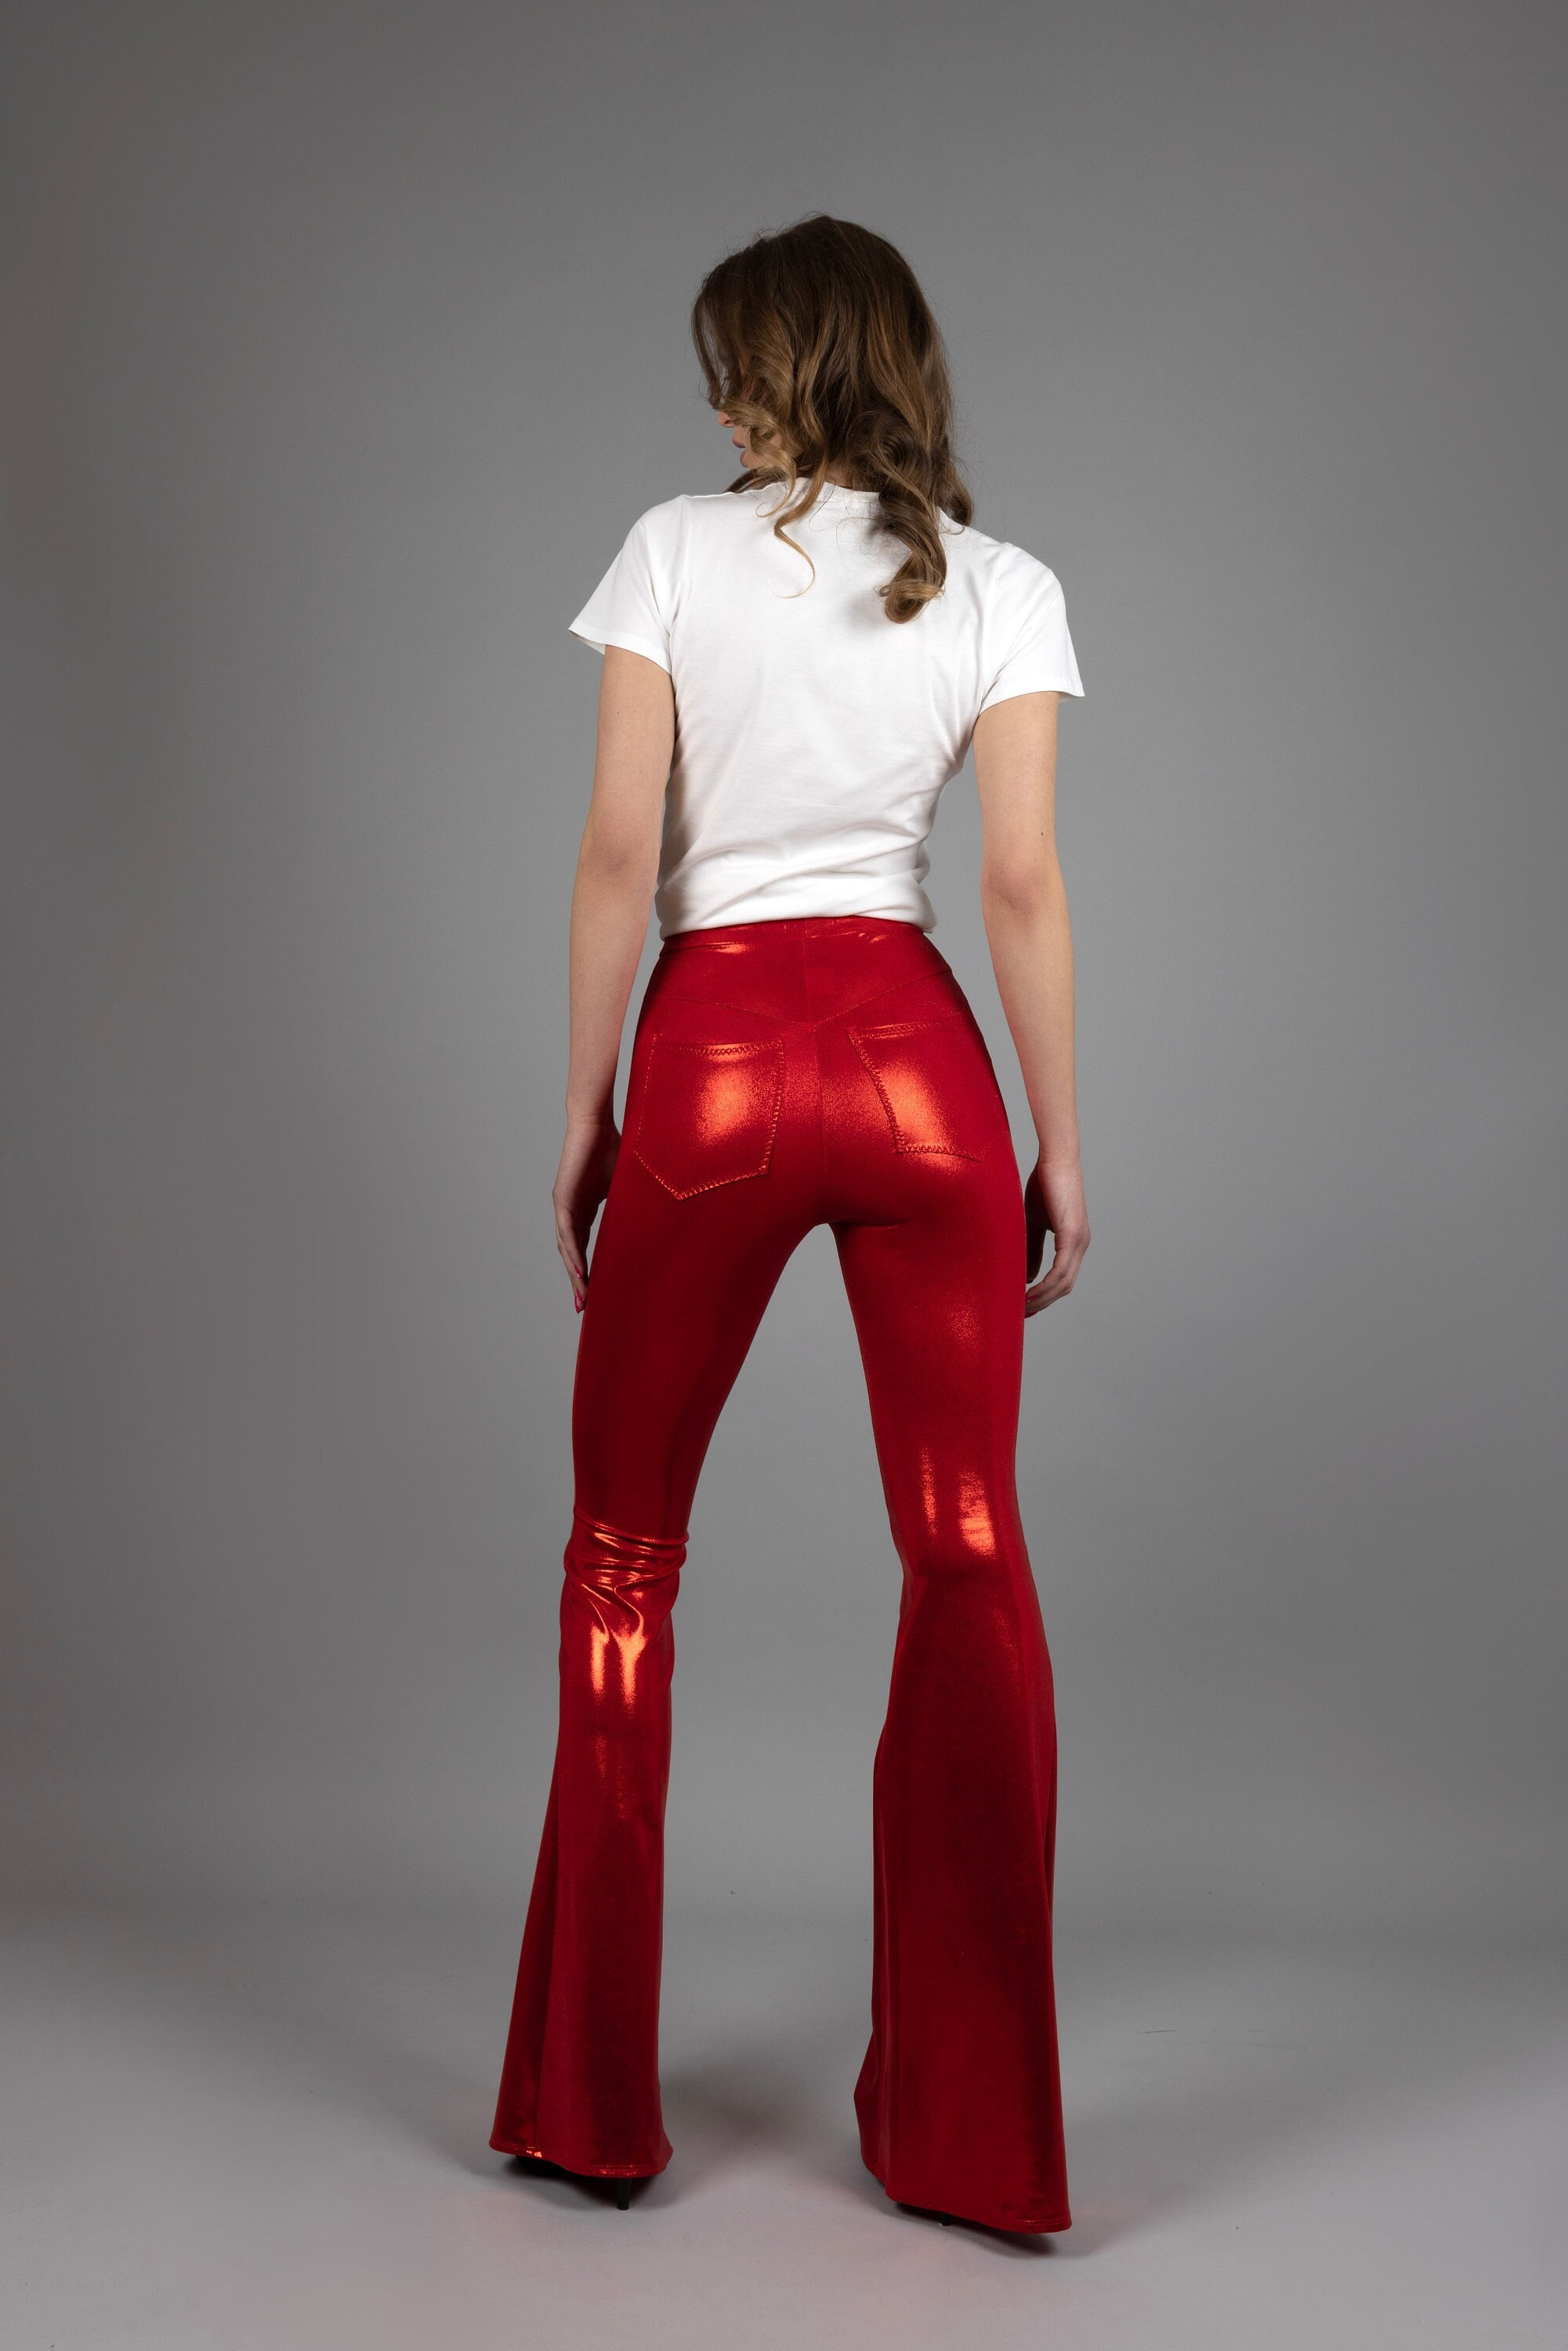 Shiny Metallic Disco Pants Womens Flare Pants Bell Bottom Trousers